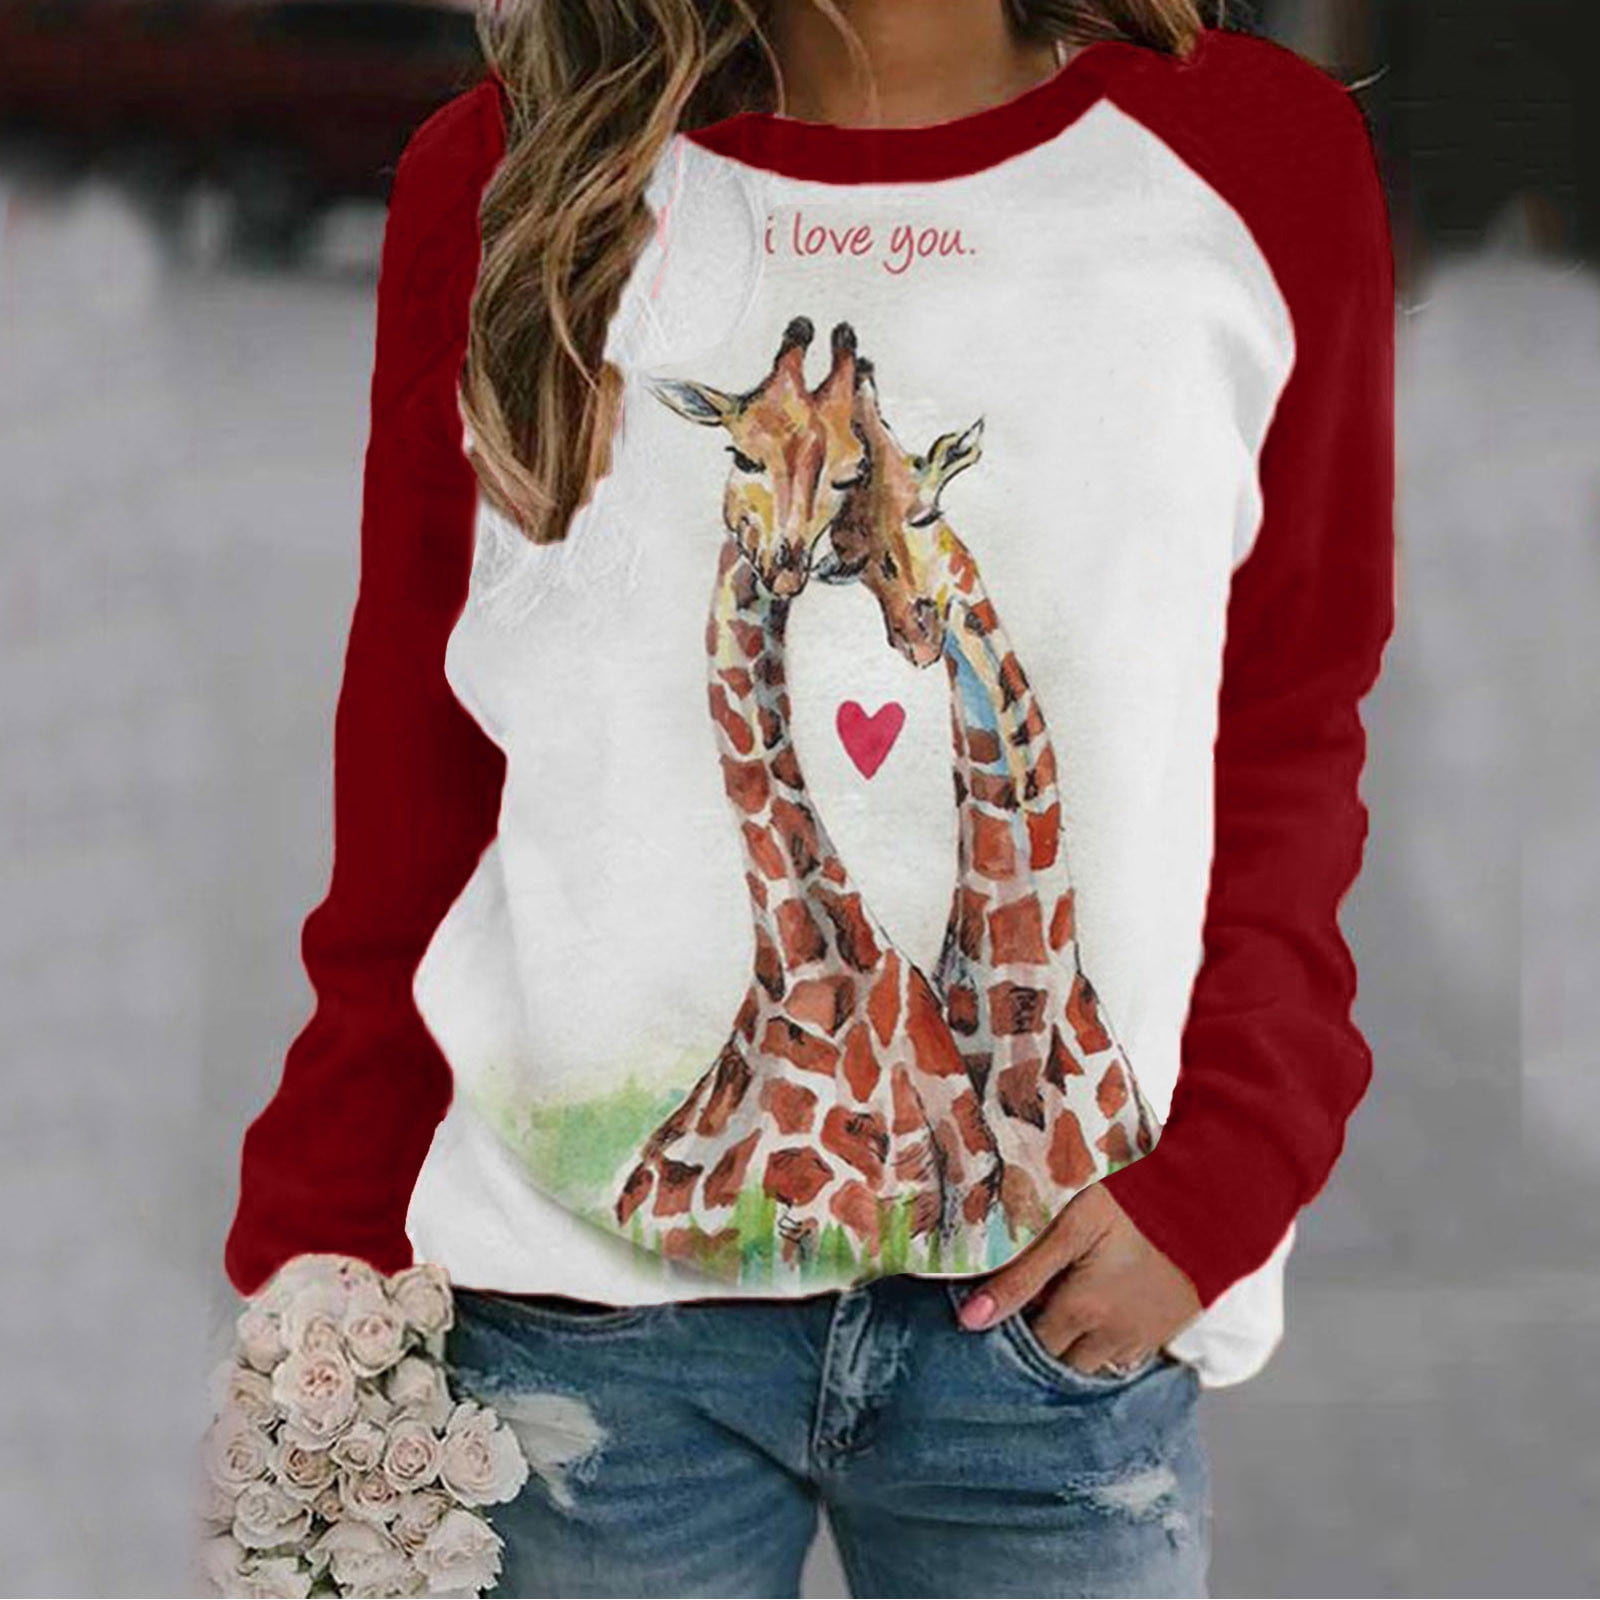 Buy Giraffe Long Sleeve Shirt for Women - UNI-T Black / XXL